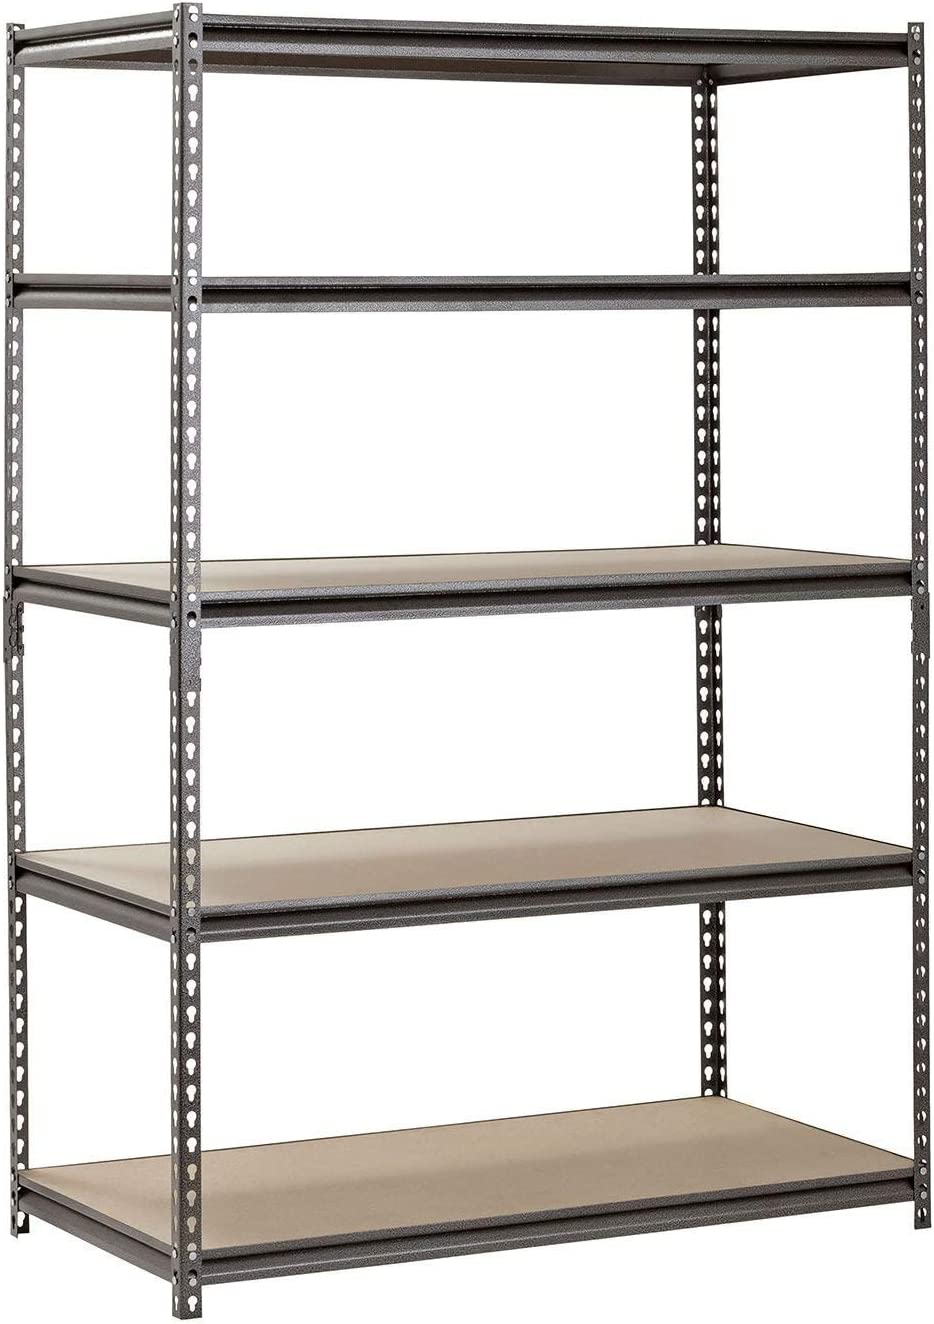 EDSAL Heavy Duty Garage Shelf Steel Metal Storage 5 Level Adjustable Shelves Unit 72" H x 48" W x 24" Deep (Pack of 2)